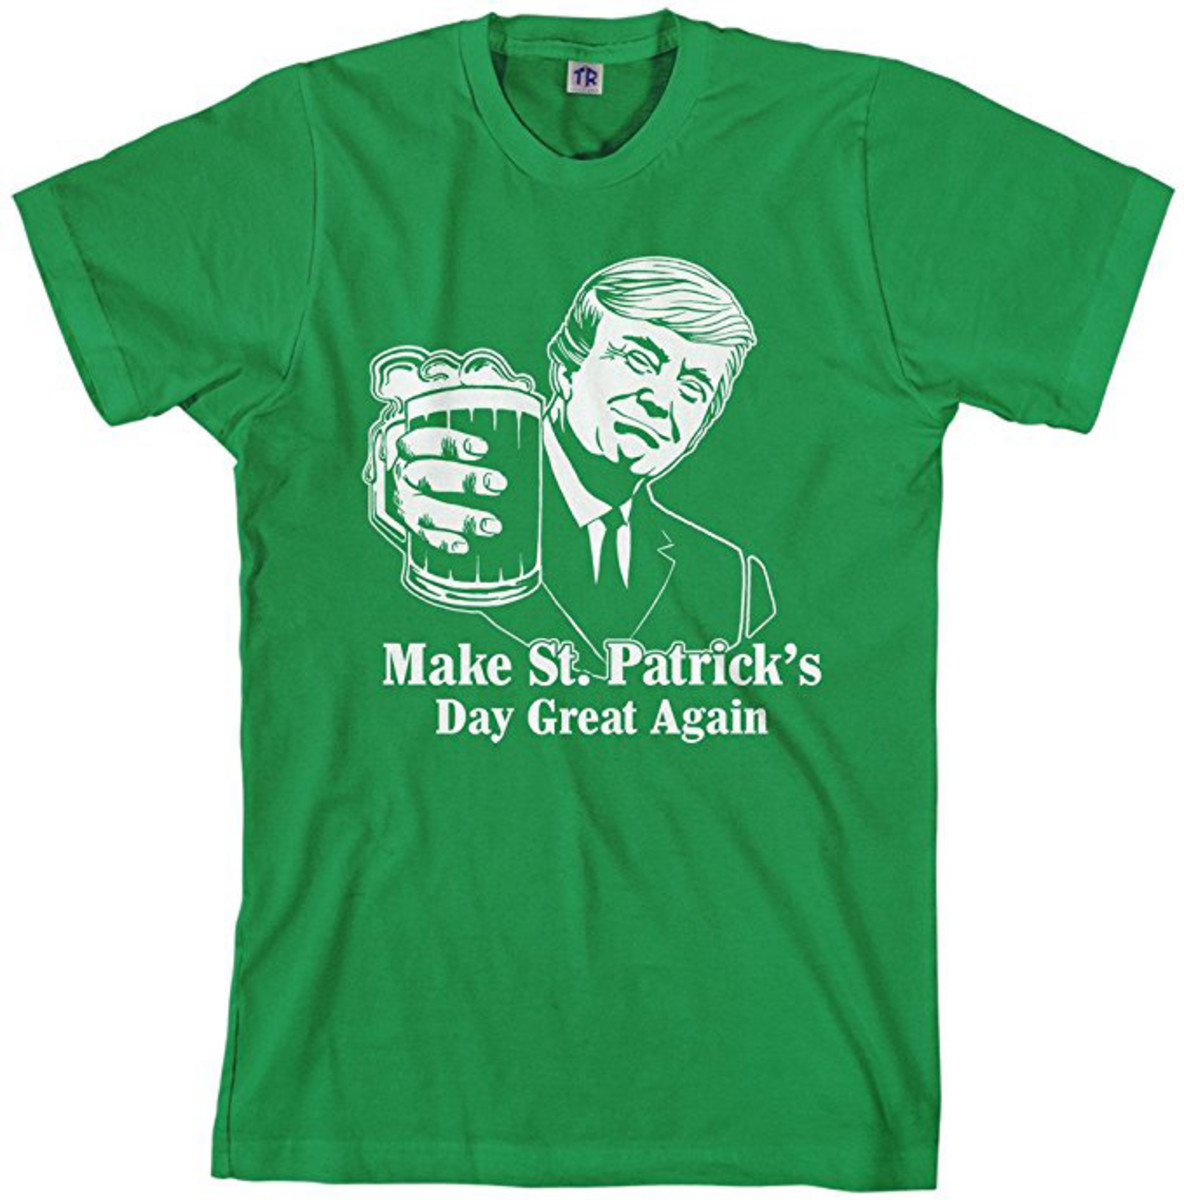 Best St. Patrick's Day shirts, sports jerseys, shoes - Sports Illustrated